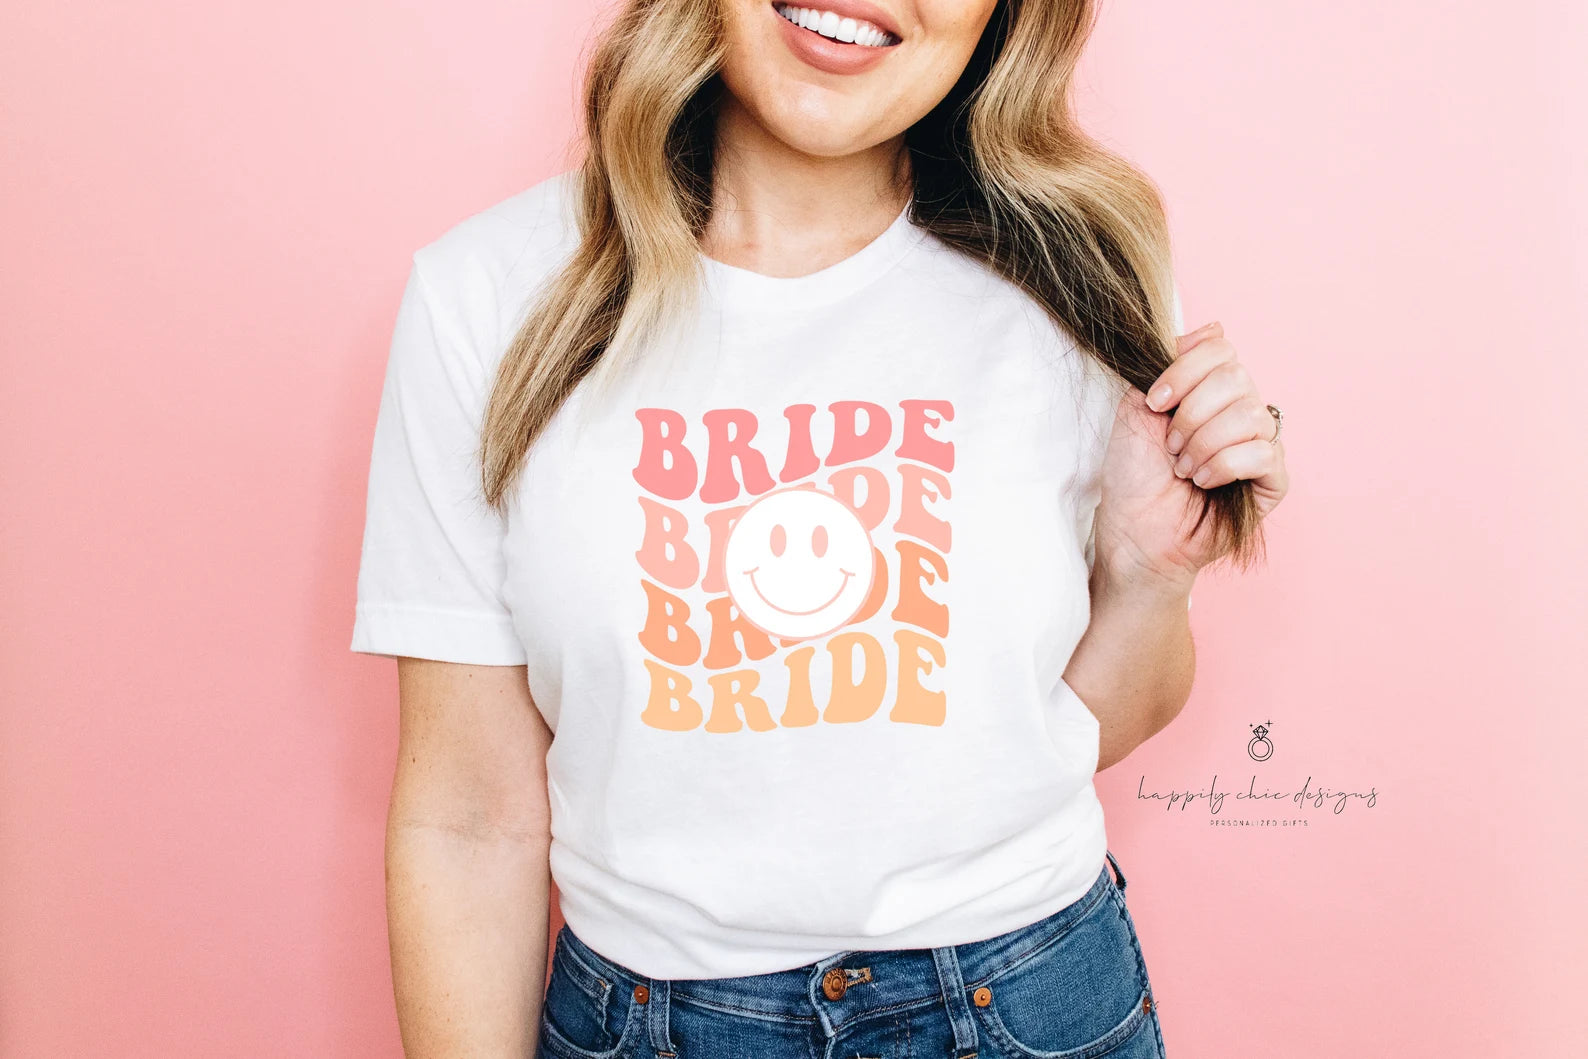 Retro i do crew happy face bridesmaid shirts- bachelorette party shirts- lets go bride tribe squad- bridal party shirt idea custom smile face